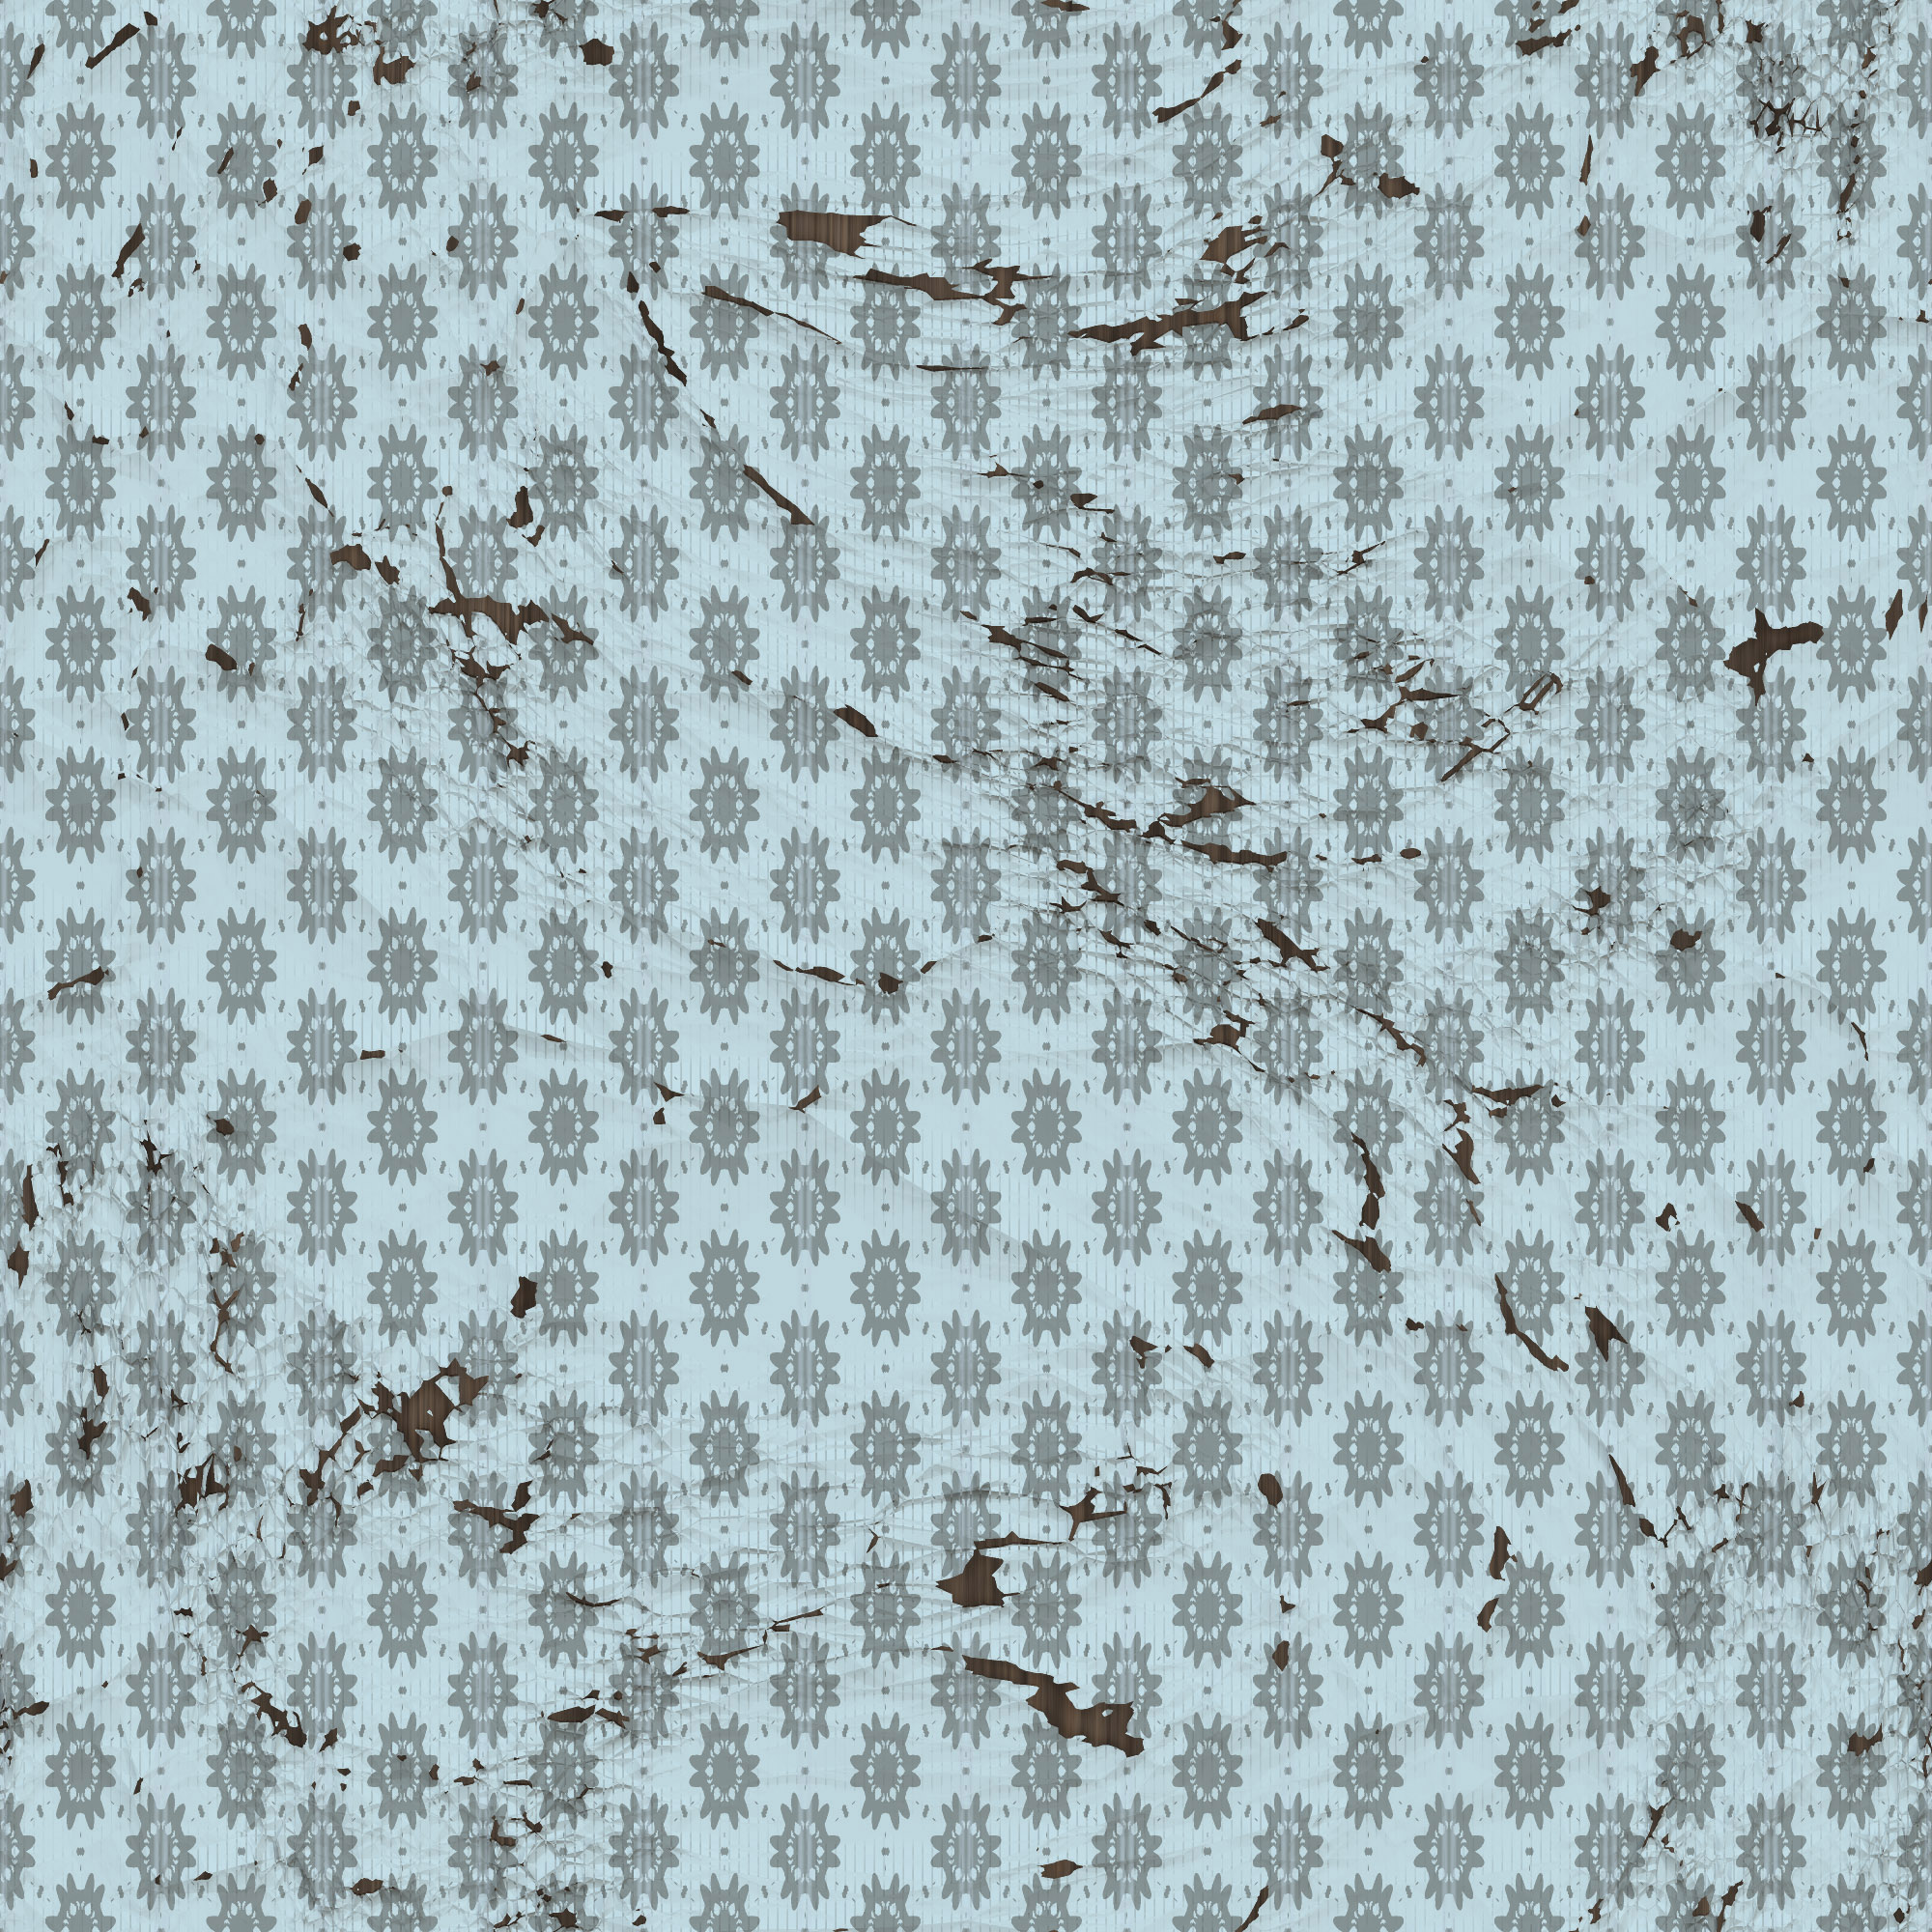 Torn wallpaper paper texture www.myfreetextures.com 1500 Free